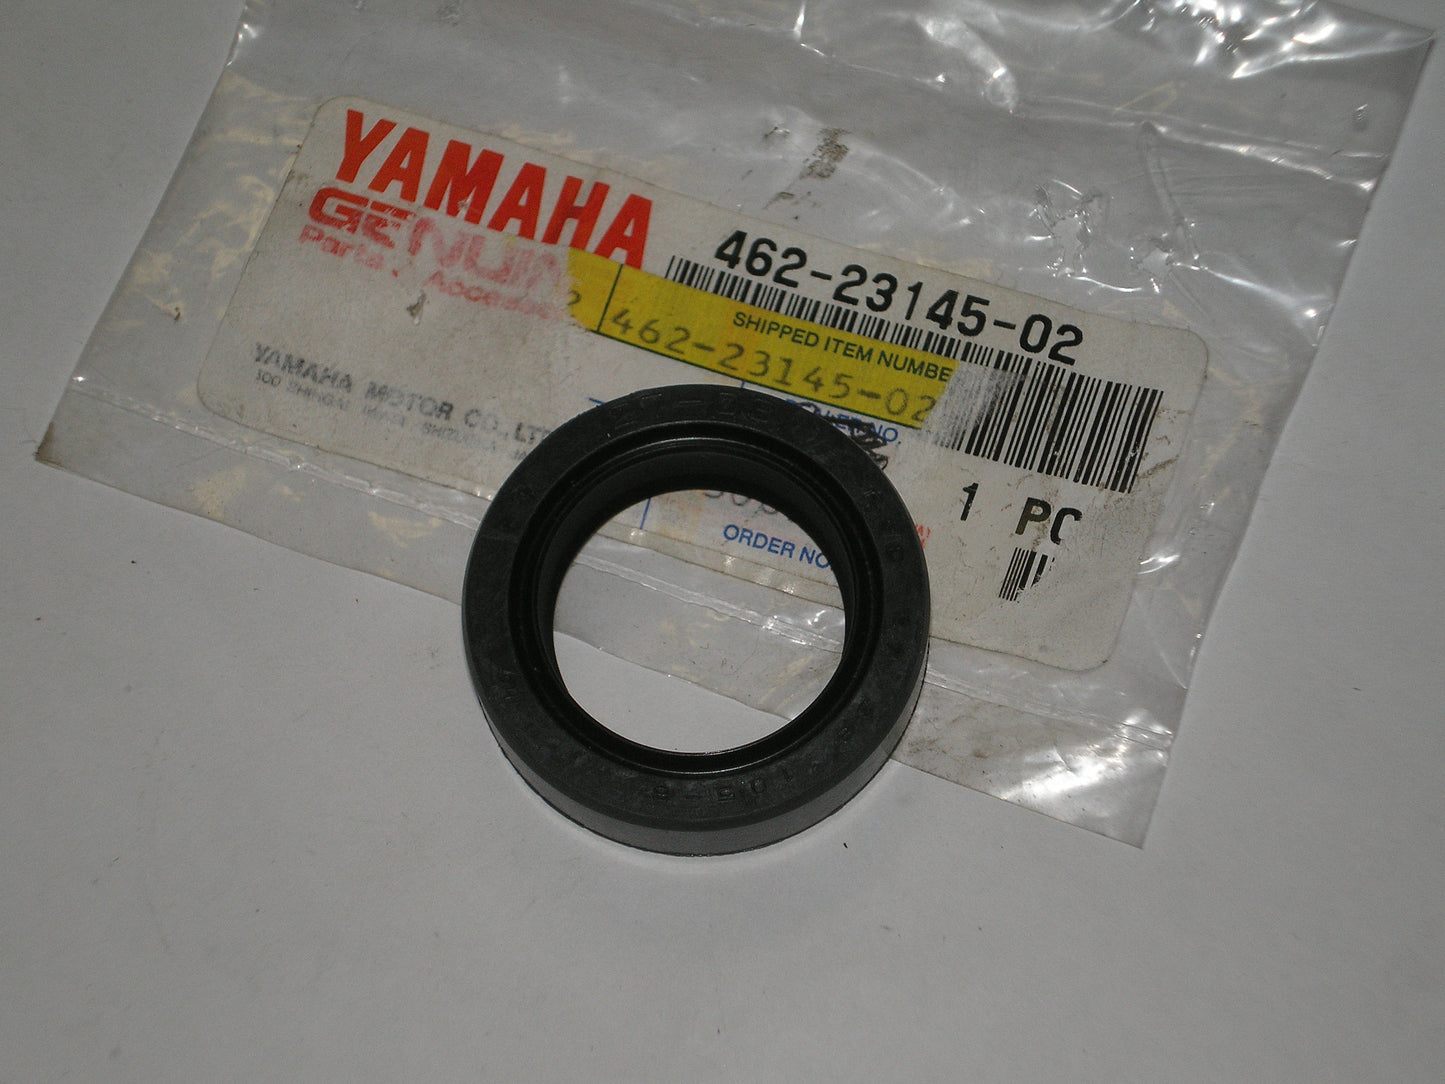 YAMAMA DT100 MX100 RT100 RX50 YSR50 YSR80 YZ80 Front Fork Oil Seal  462-23145-02 / 2M6-23145-00 / 93110-27010